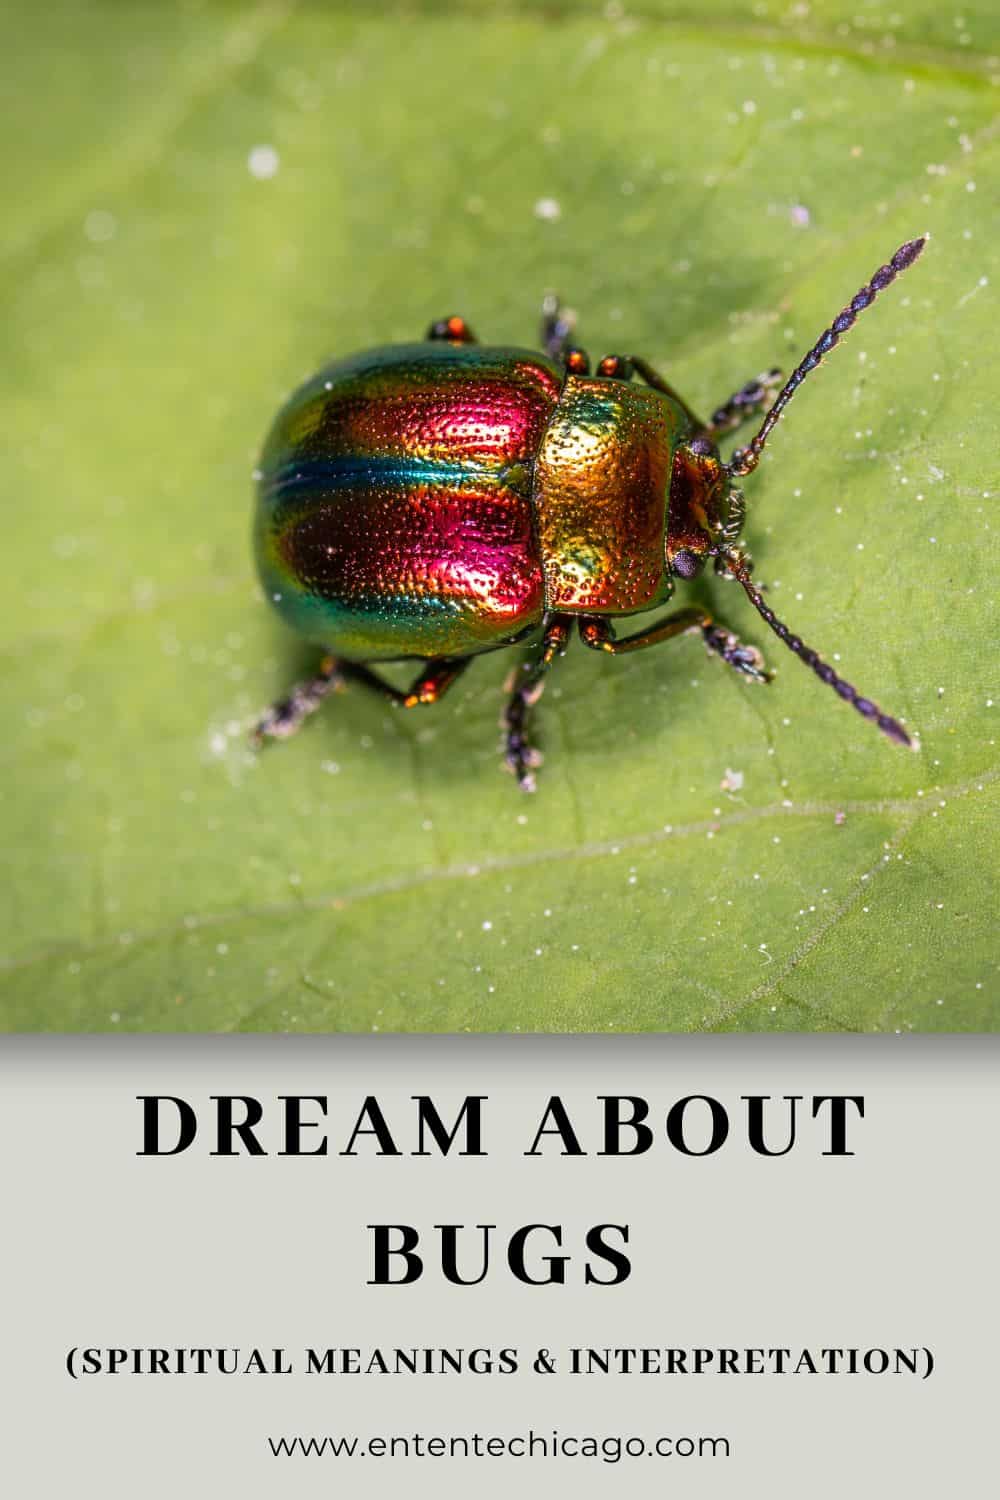 12 meanings of bug dreams